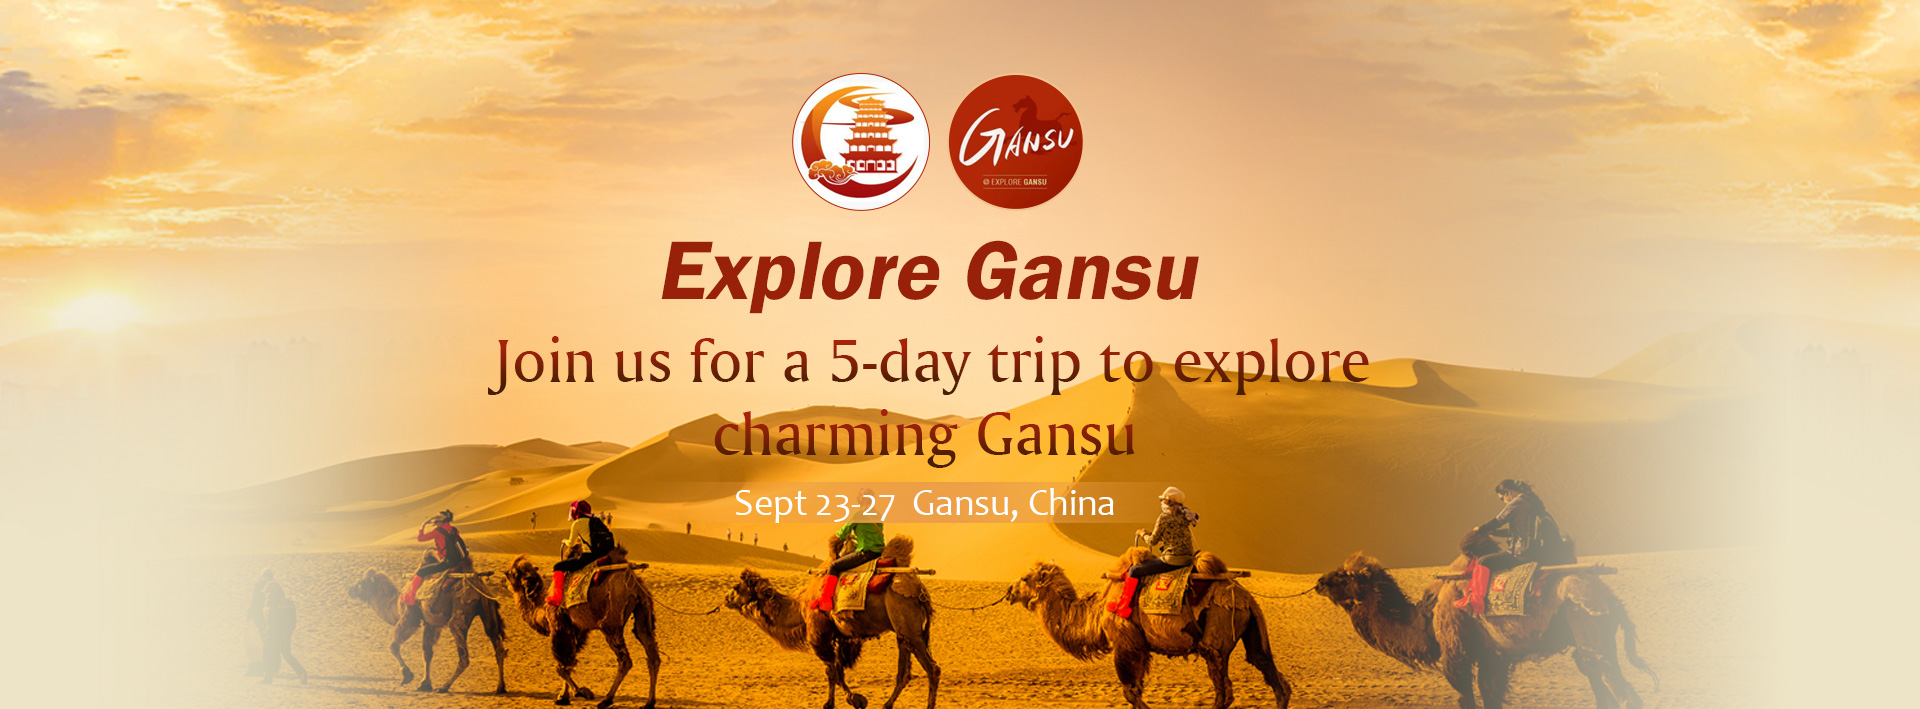 Explore Gansu: a 5-day trip to explore charming Gansu